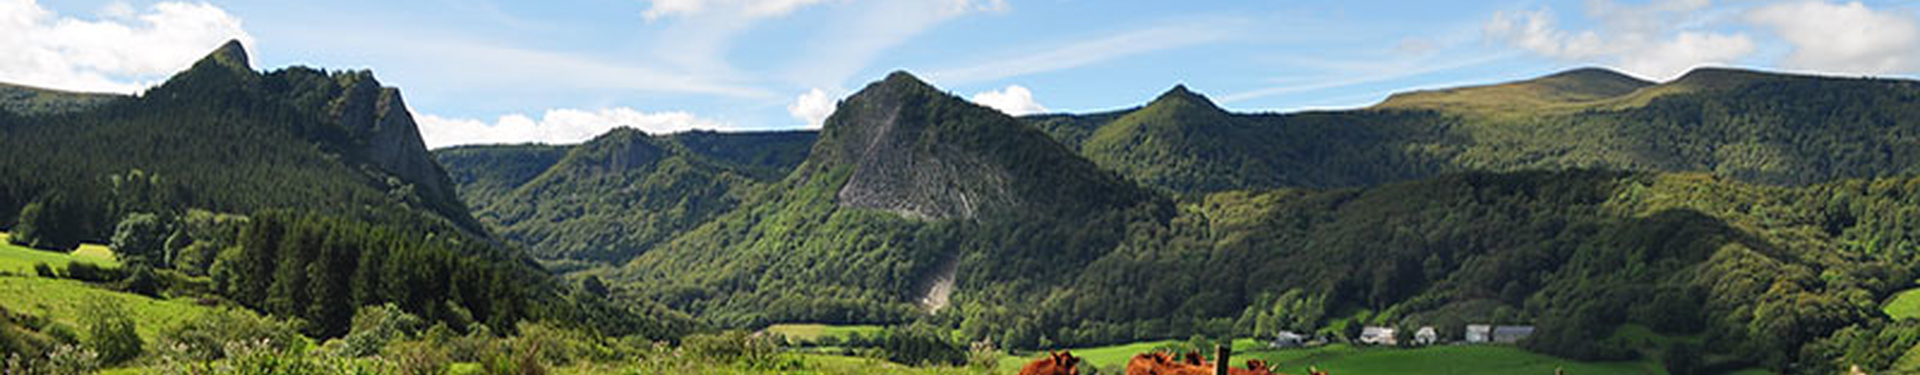 4 Days hiking on Auvergne Volcanoes - 3 nights in hotel | Aluna Voyages